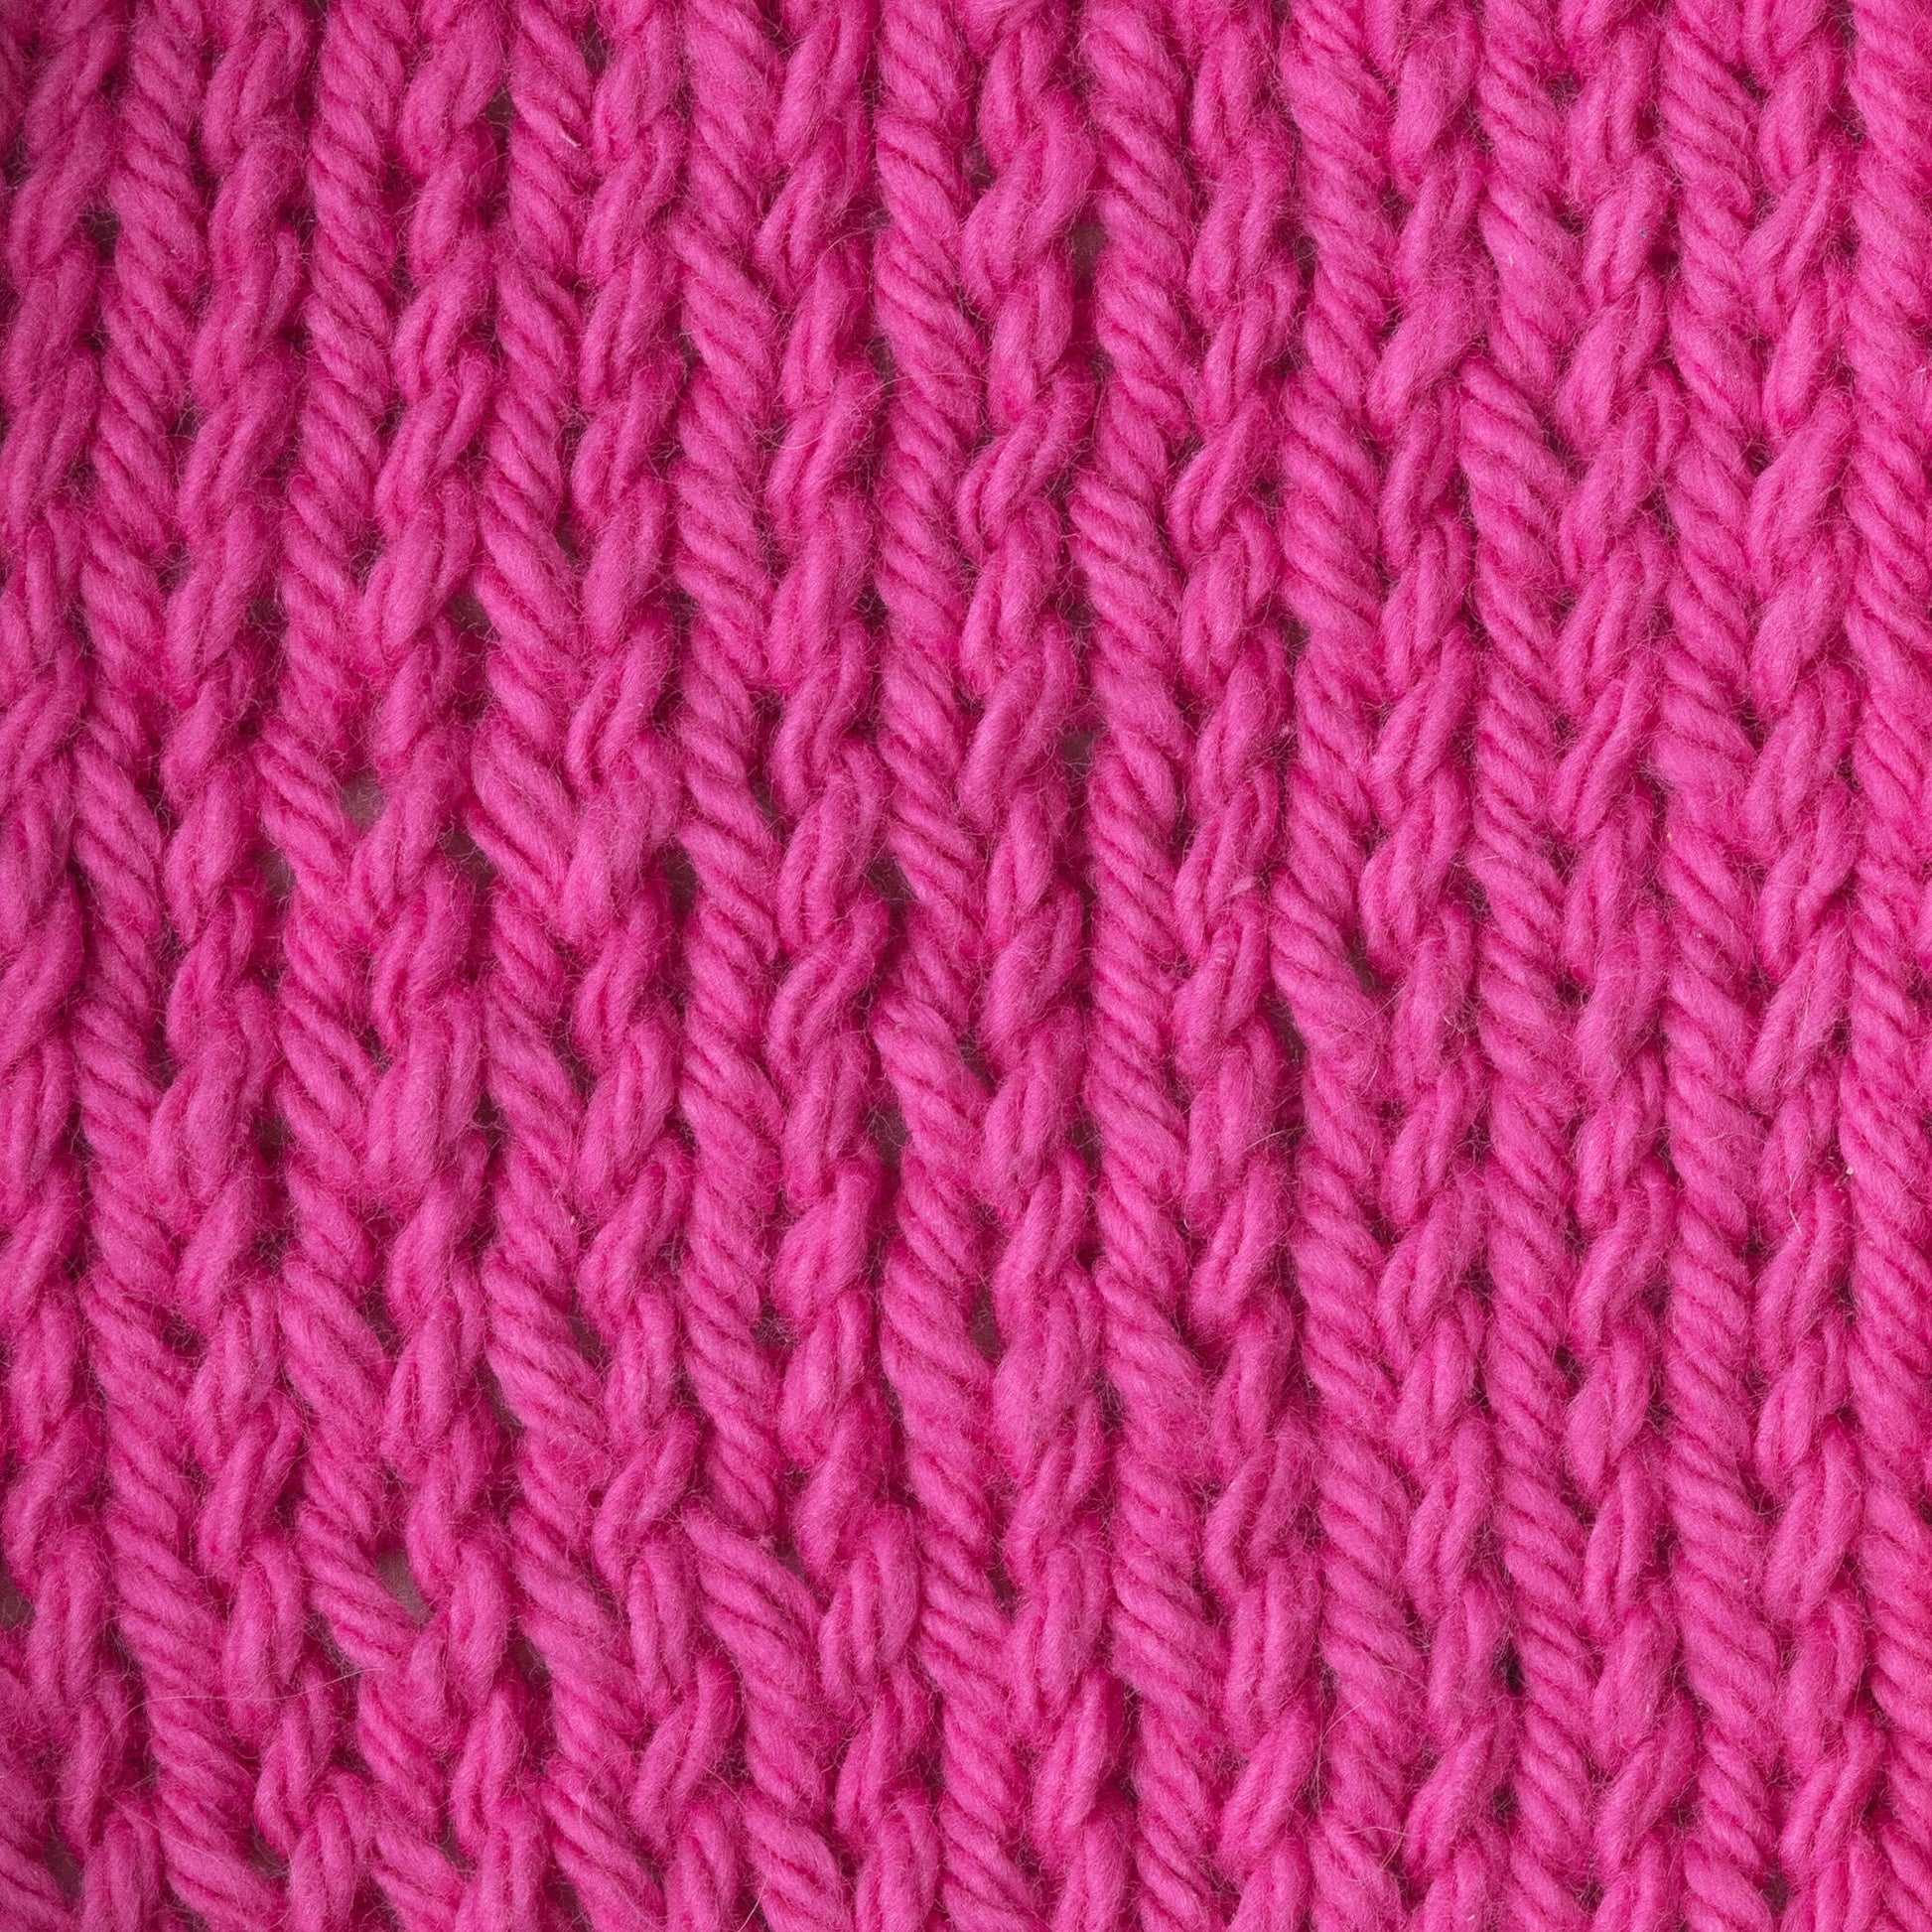 Bernat Handicrafter Cotton Yarn - Discontinued Shades